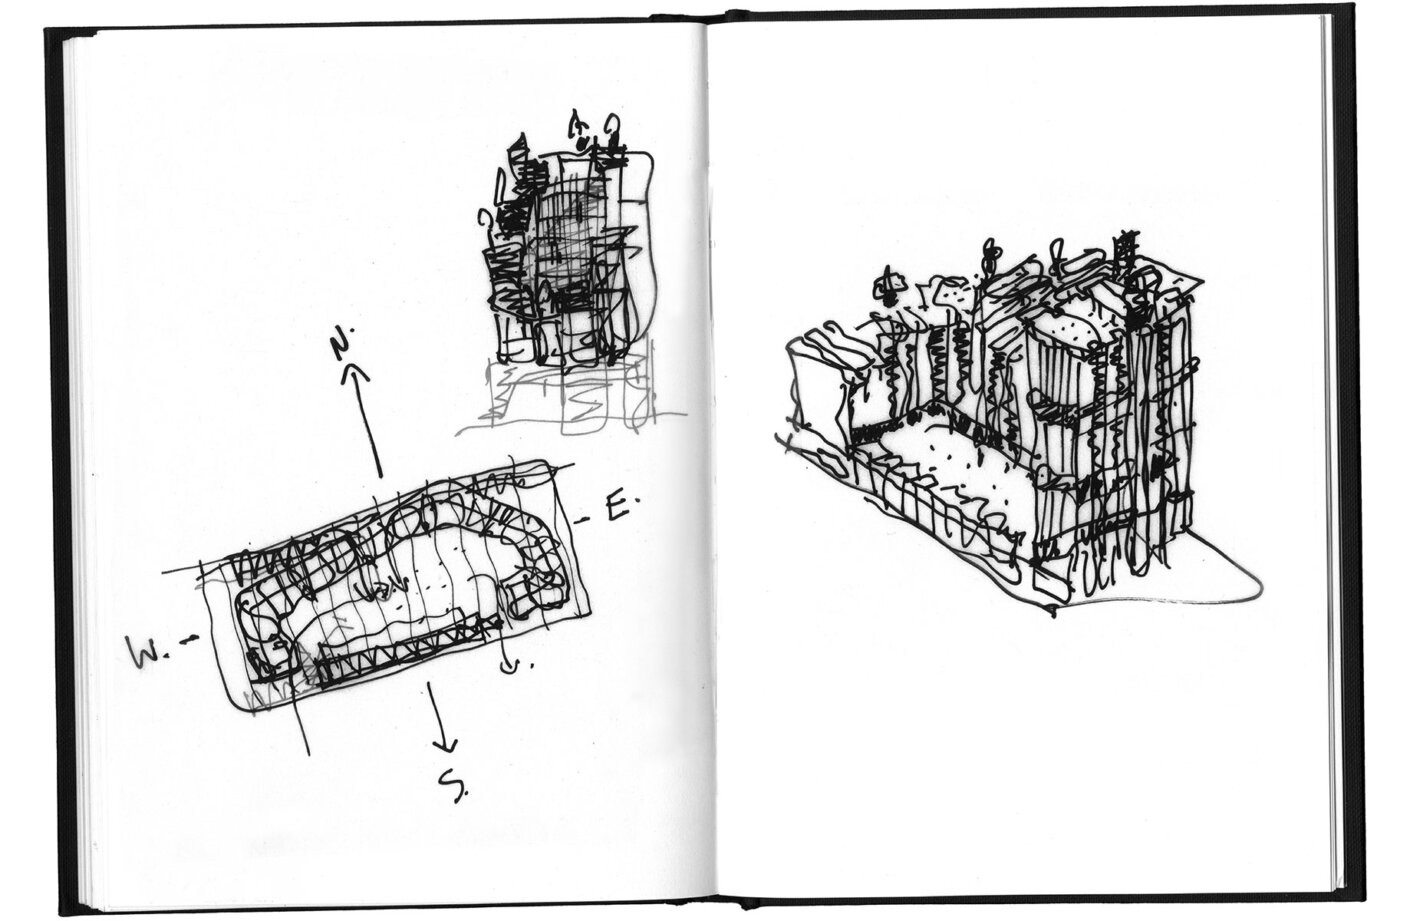 Image of Adrian's sketchbook showing project sketch.